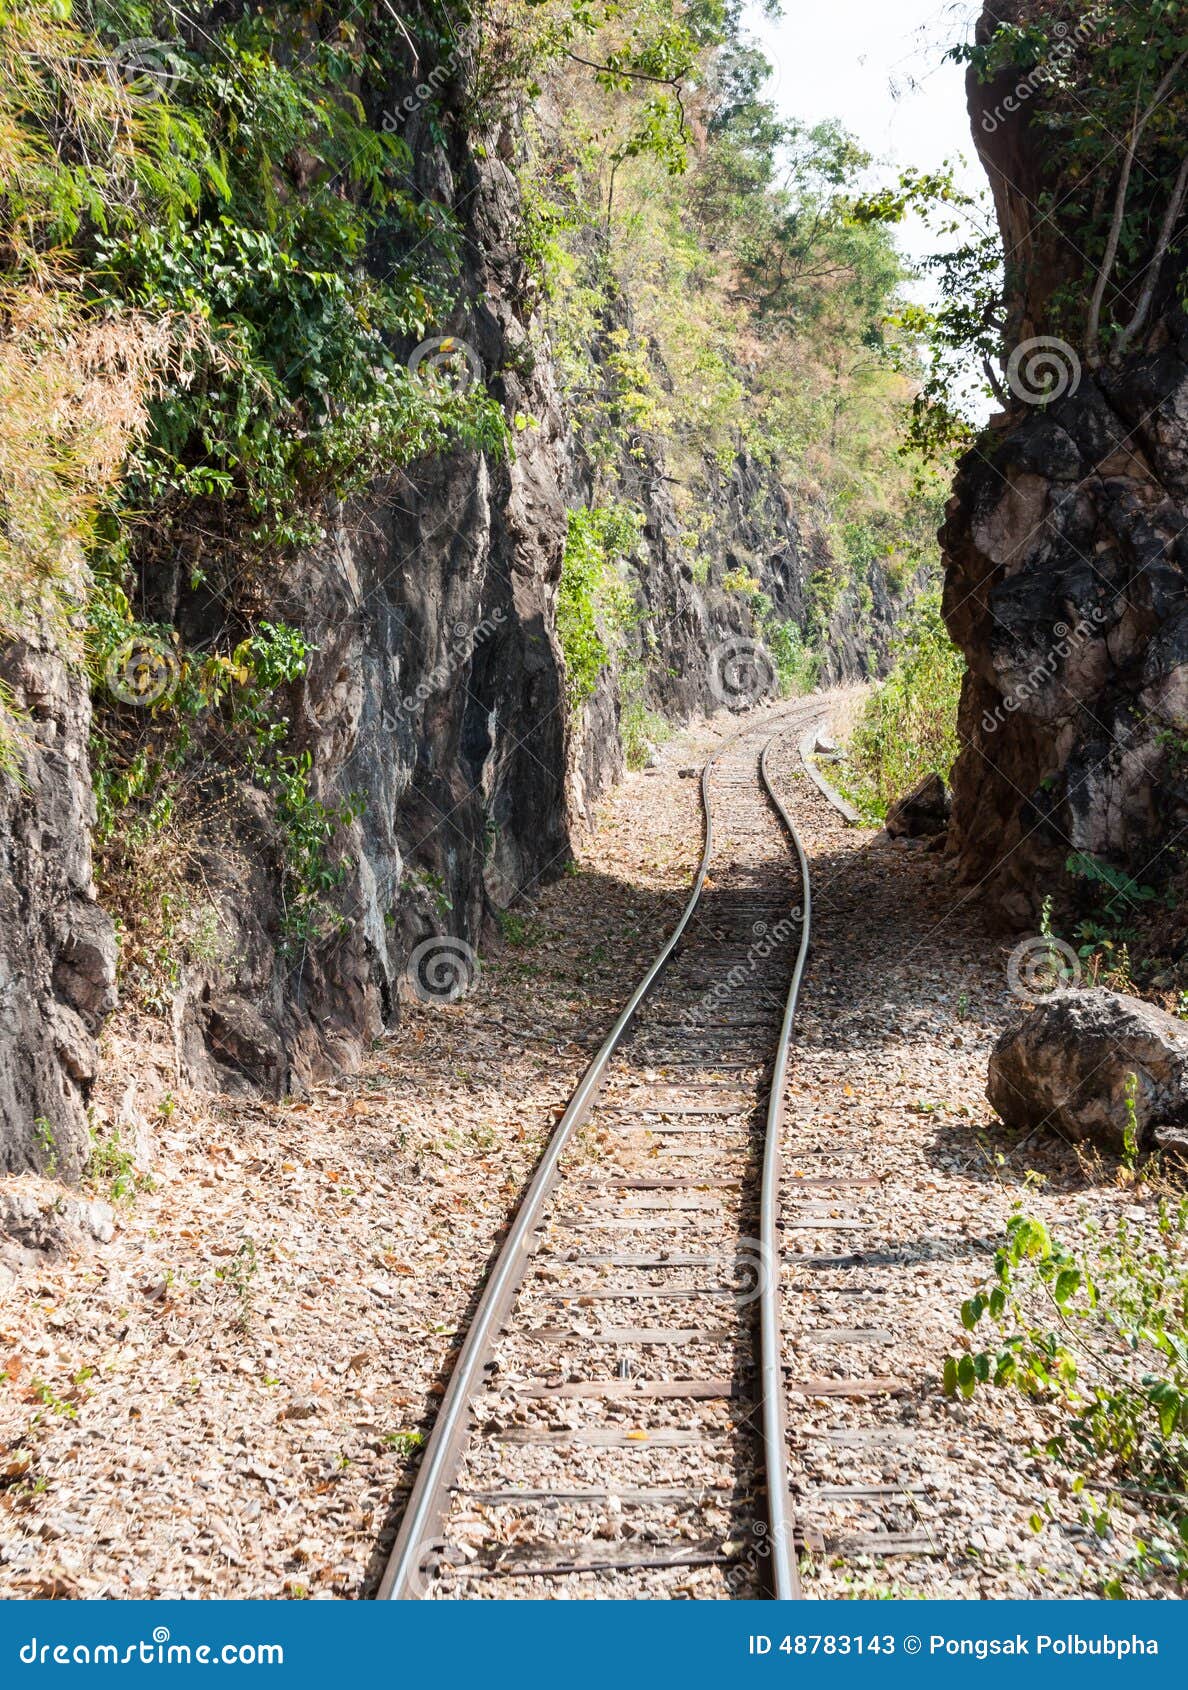 defile railway line